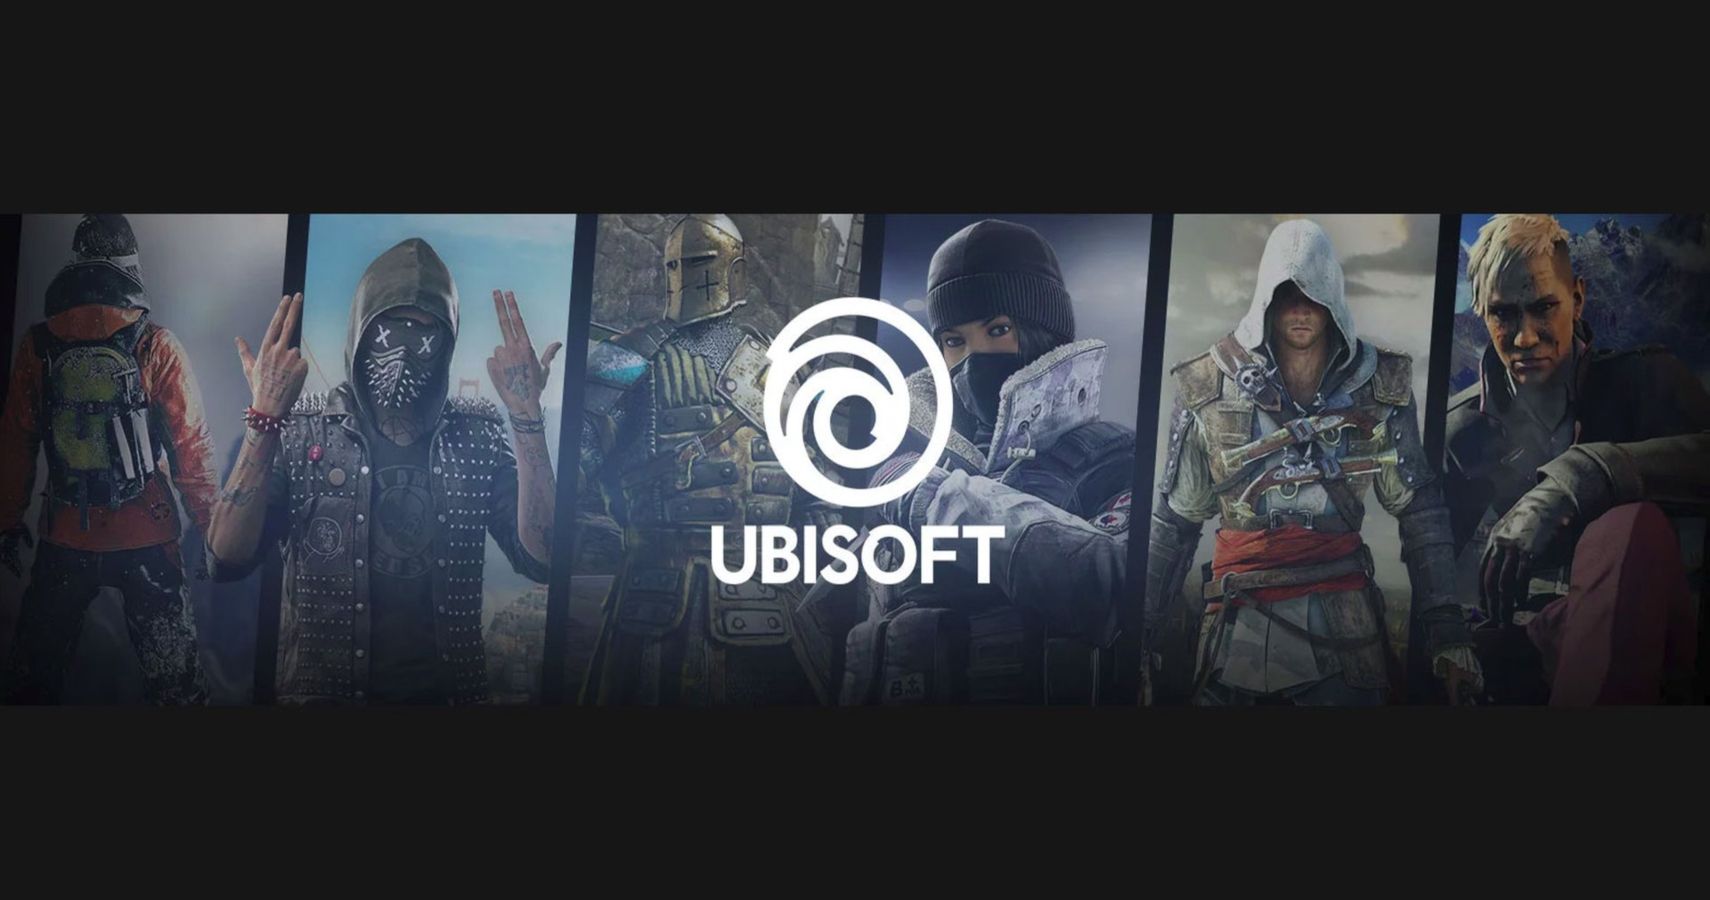 Ubisoft To Control Legitimize Digital Game Key Distribution With Silent Key Activation Process